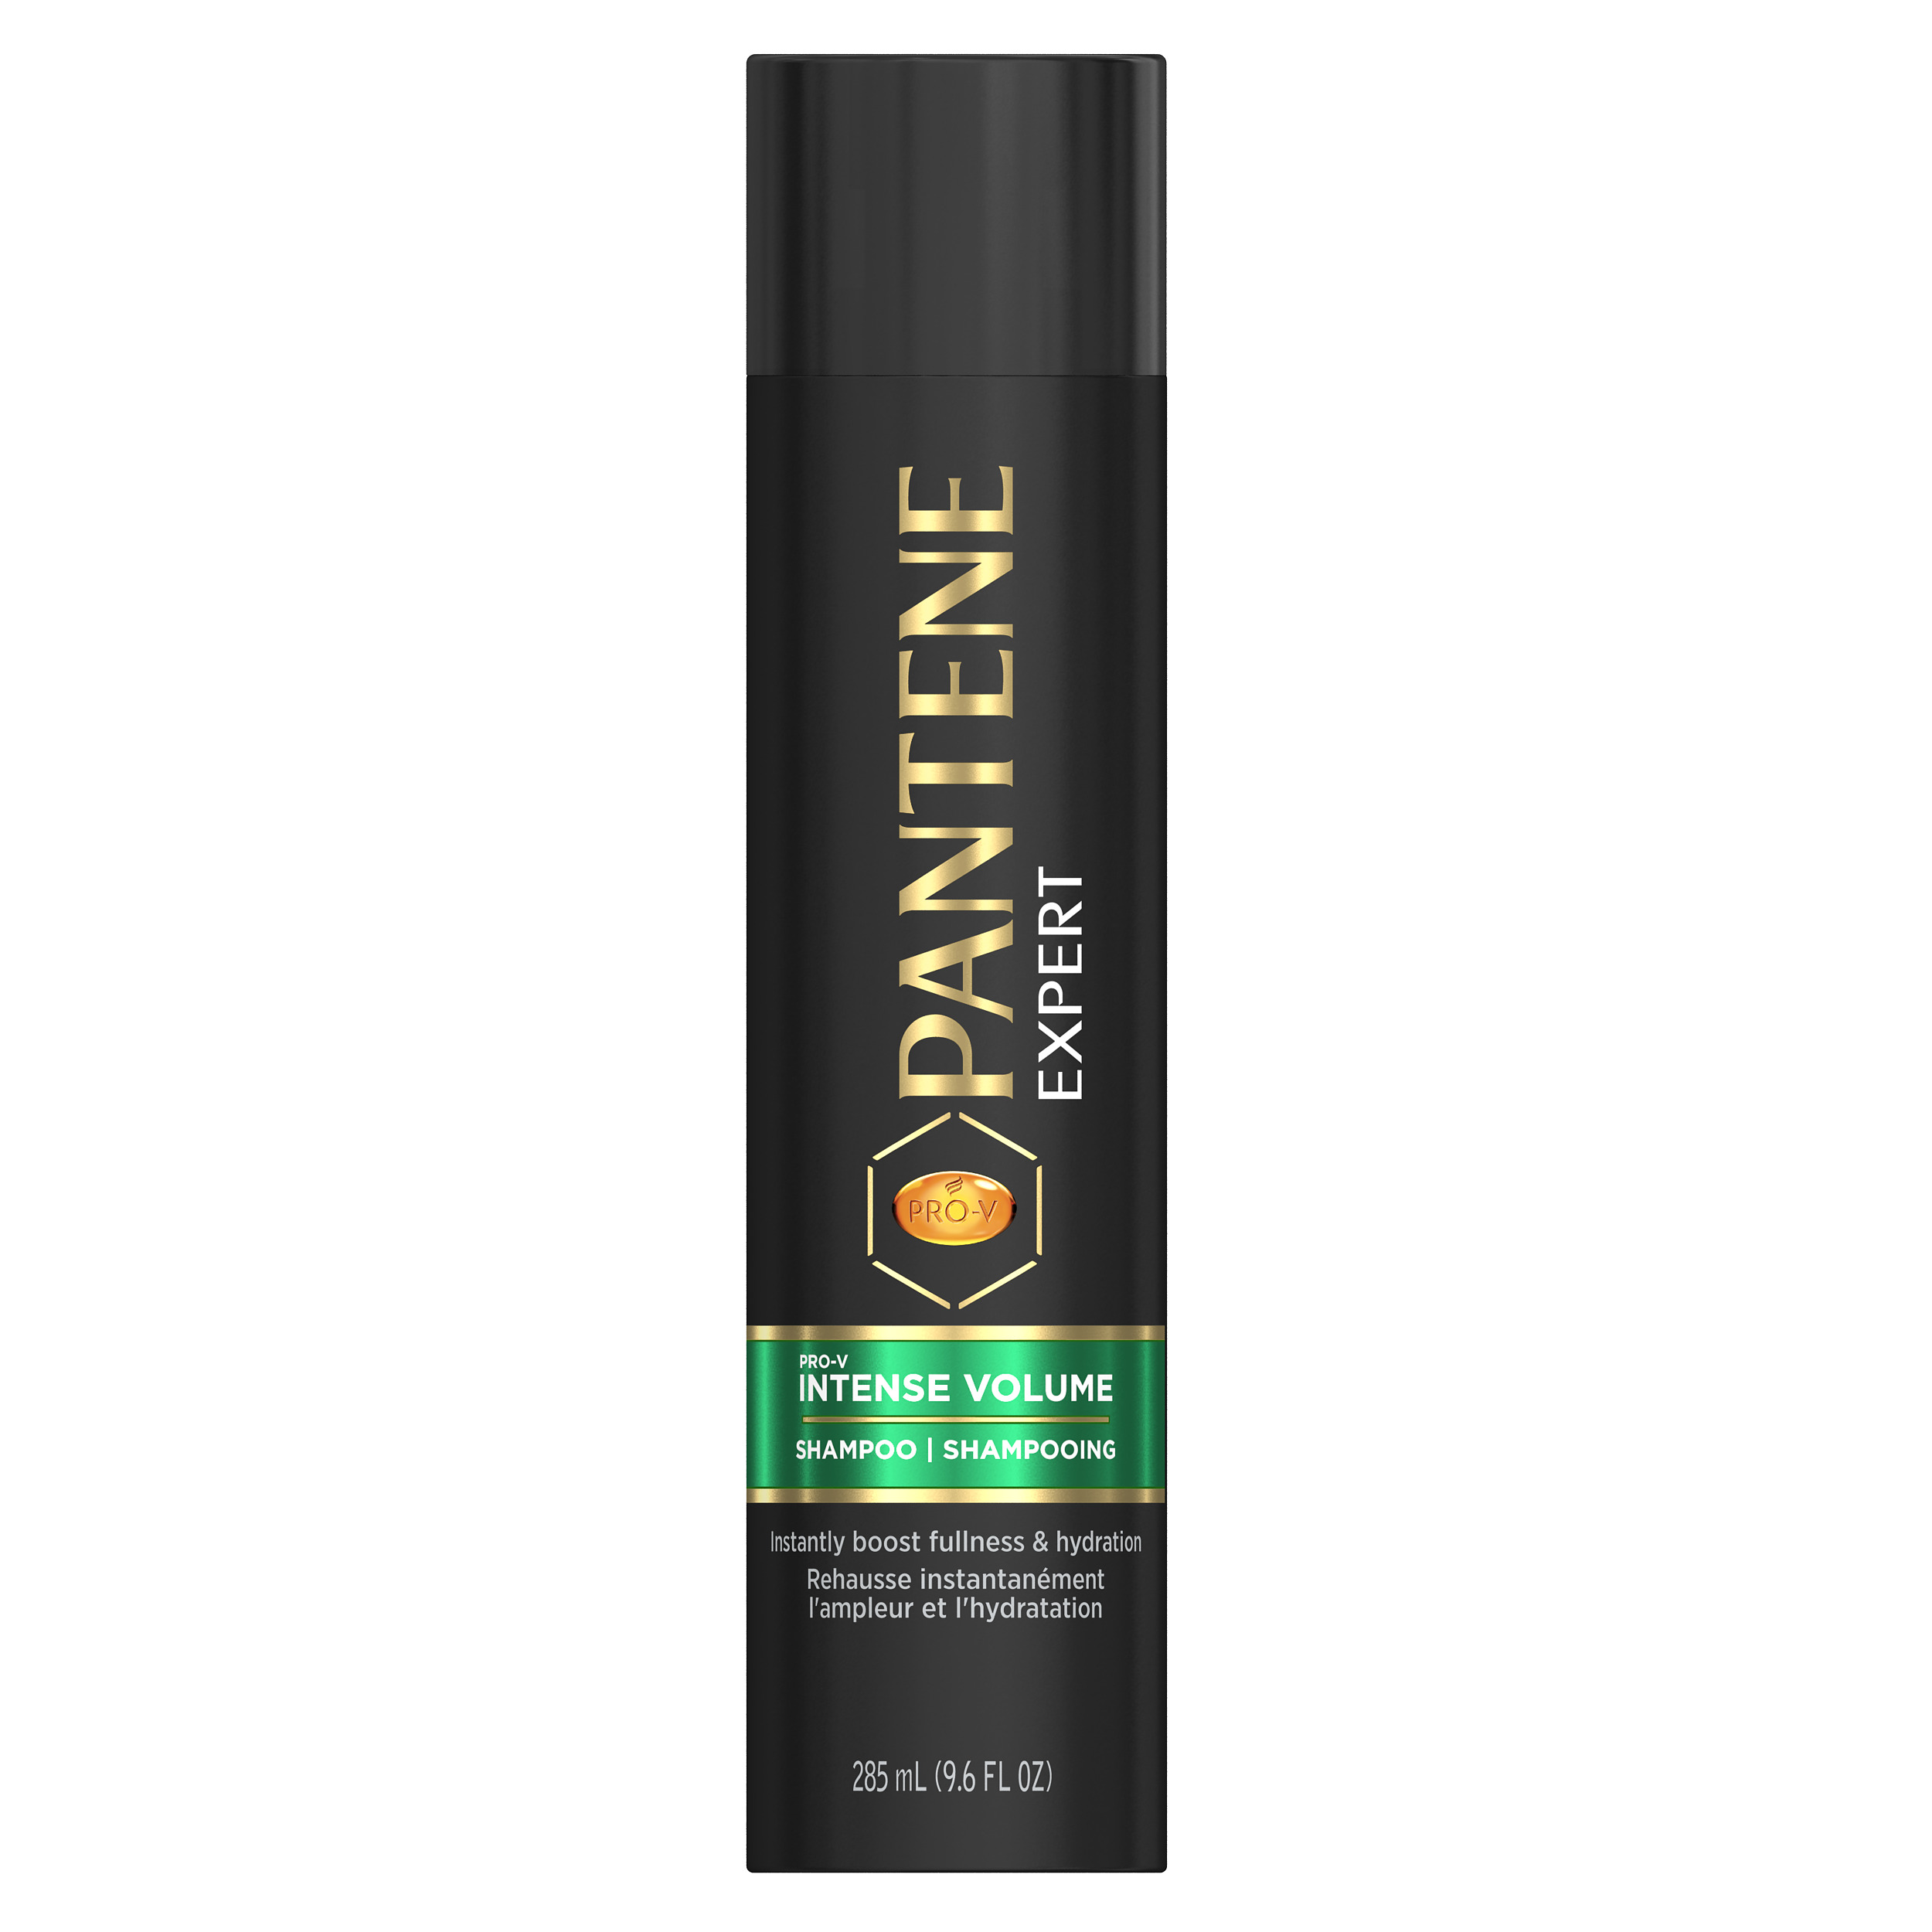 Pantene Expert Pro-V Intense Volume Shampoo, 9.6 fl oz - image 1 of 6